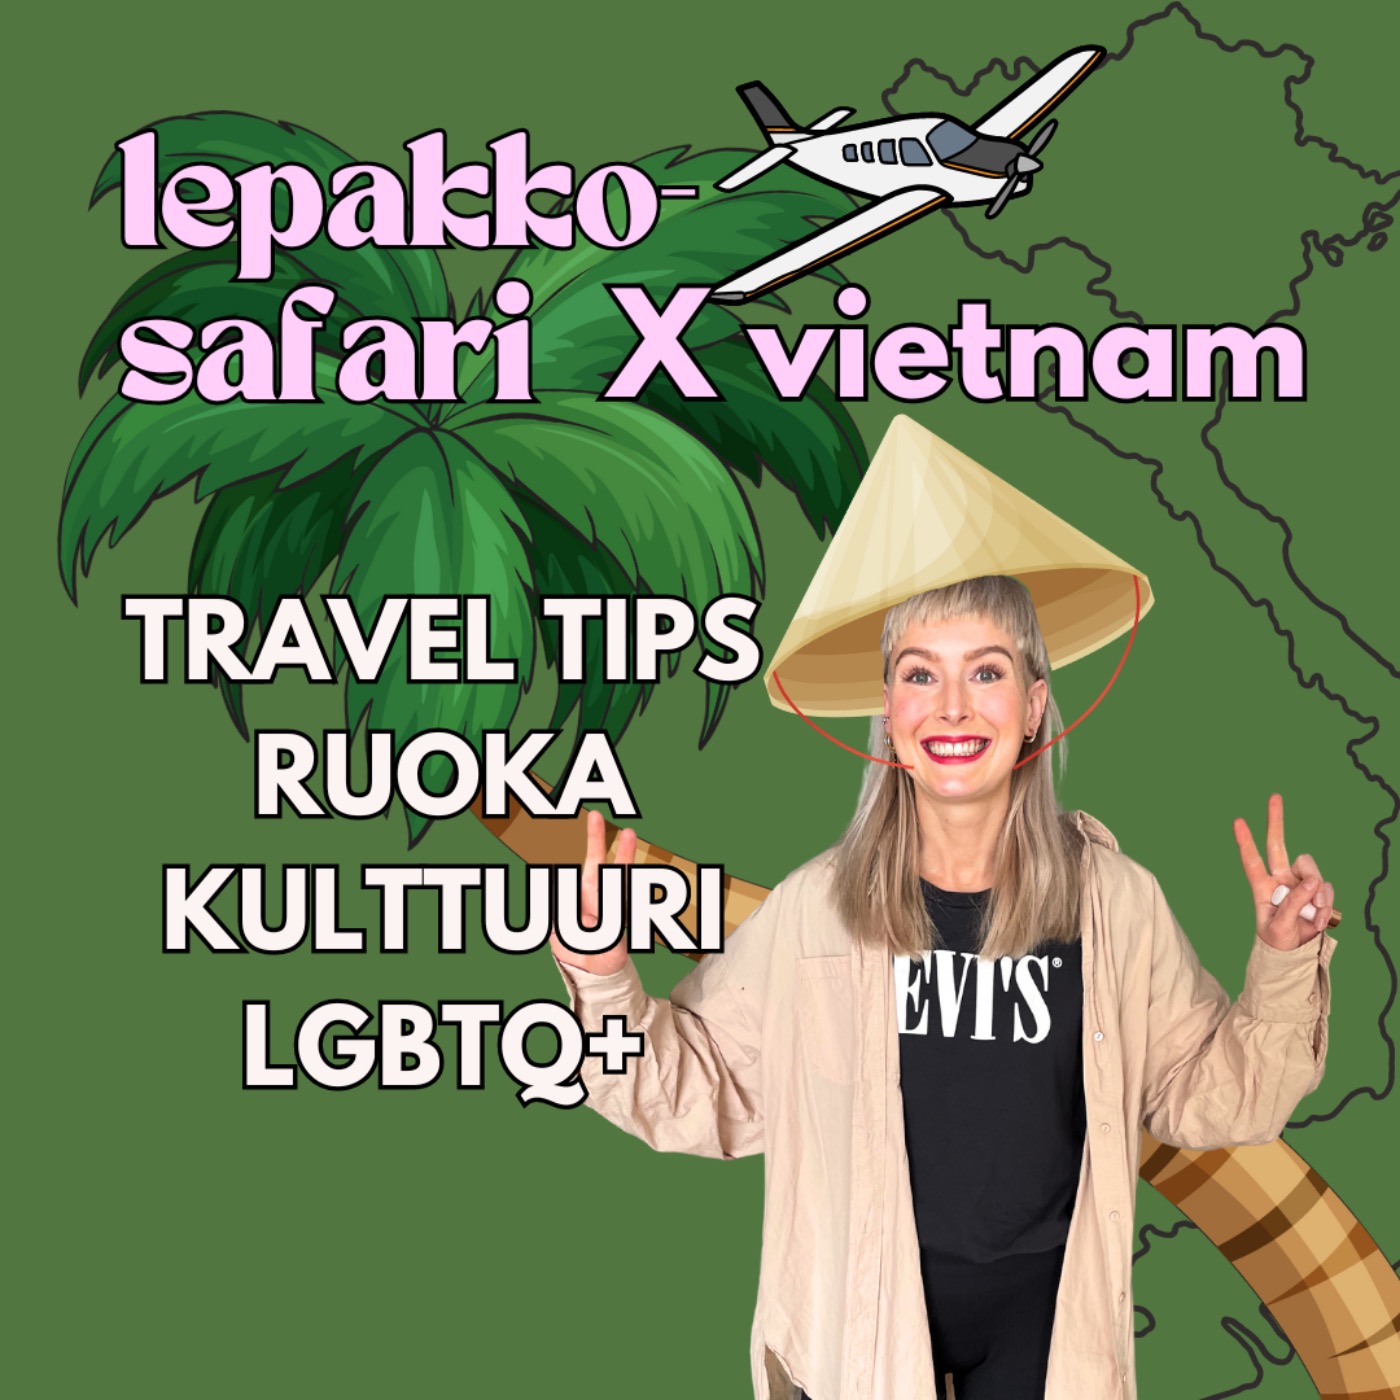 cover art for Lepakkosafari goes VIETNAM